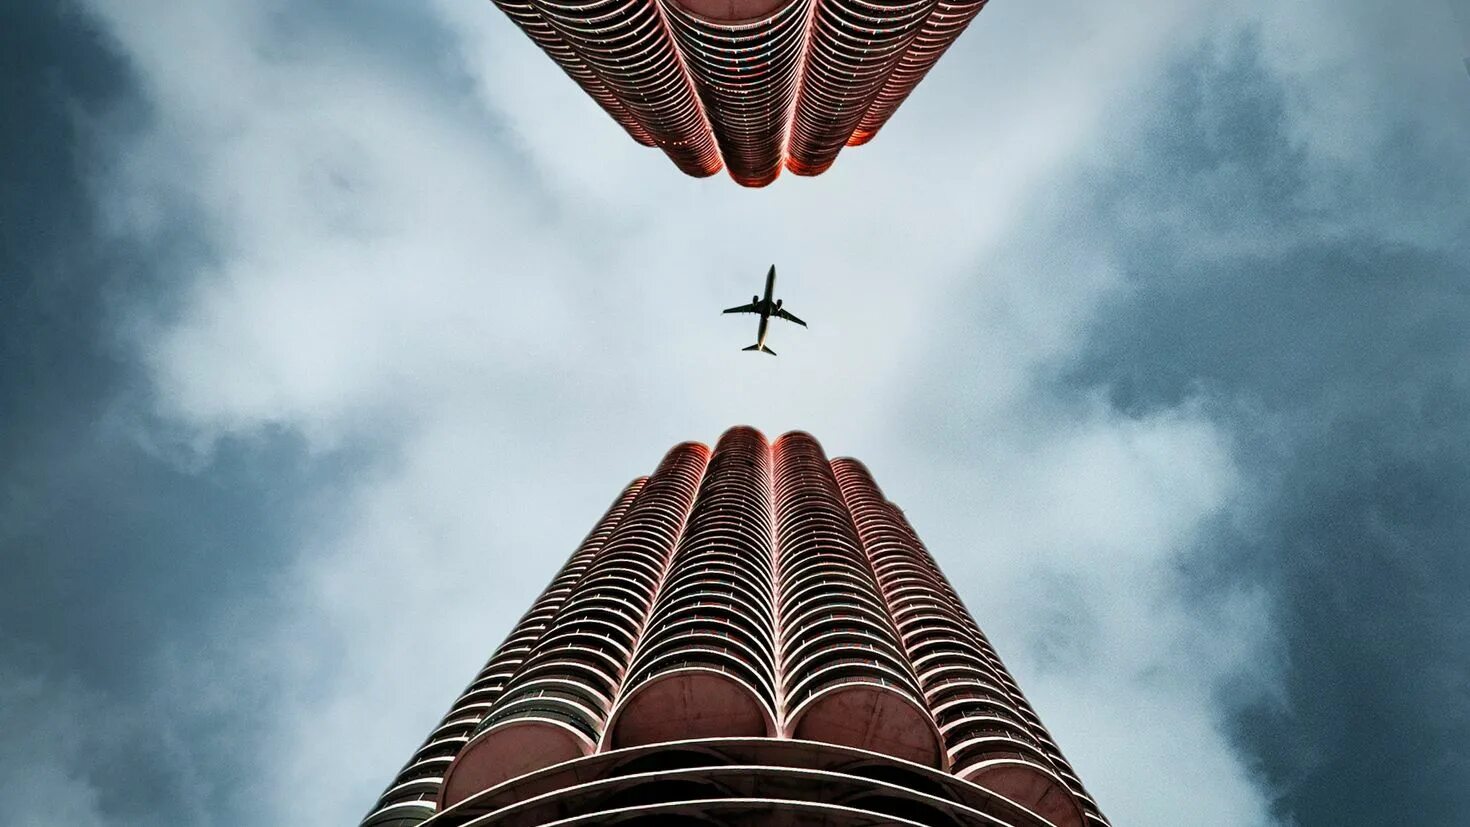 Тема снизу. Небоскребы вид снизу. Здание вид снизу. Небоскреб и самолет. Самолет над небоскребами.